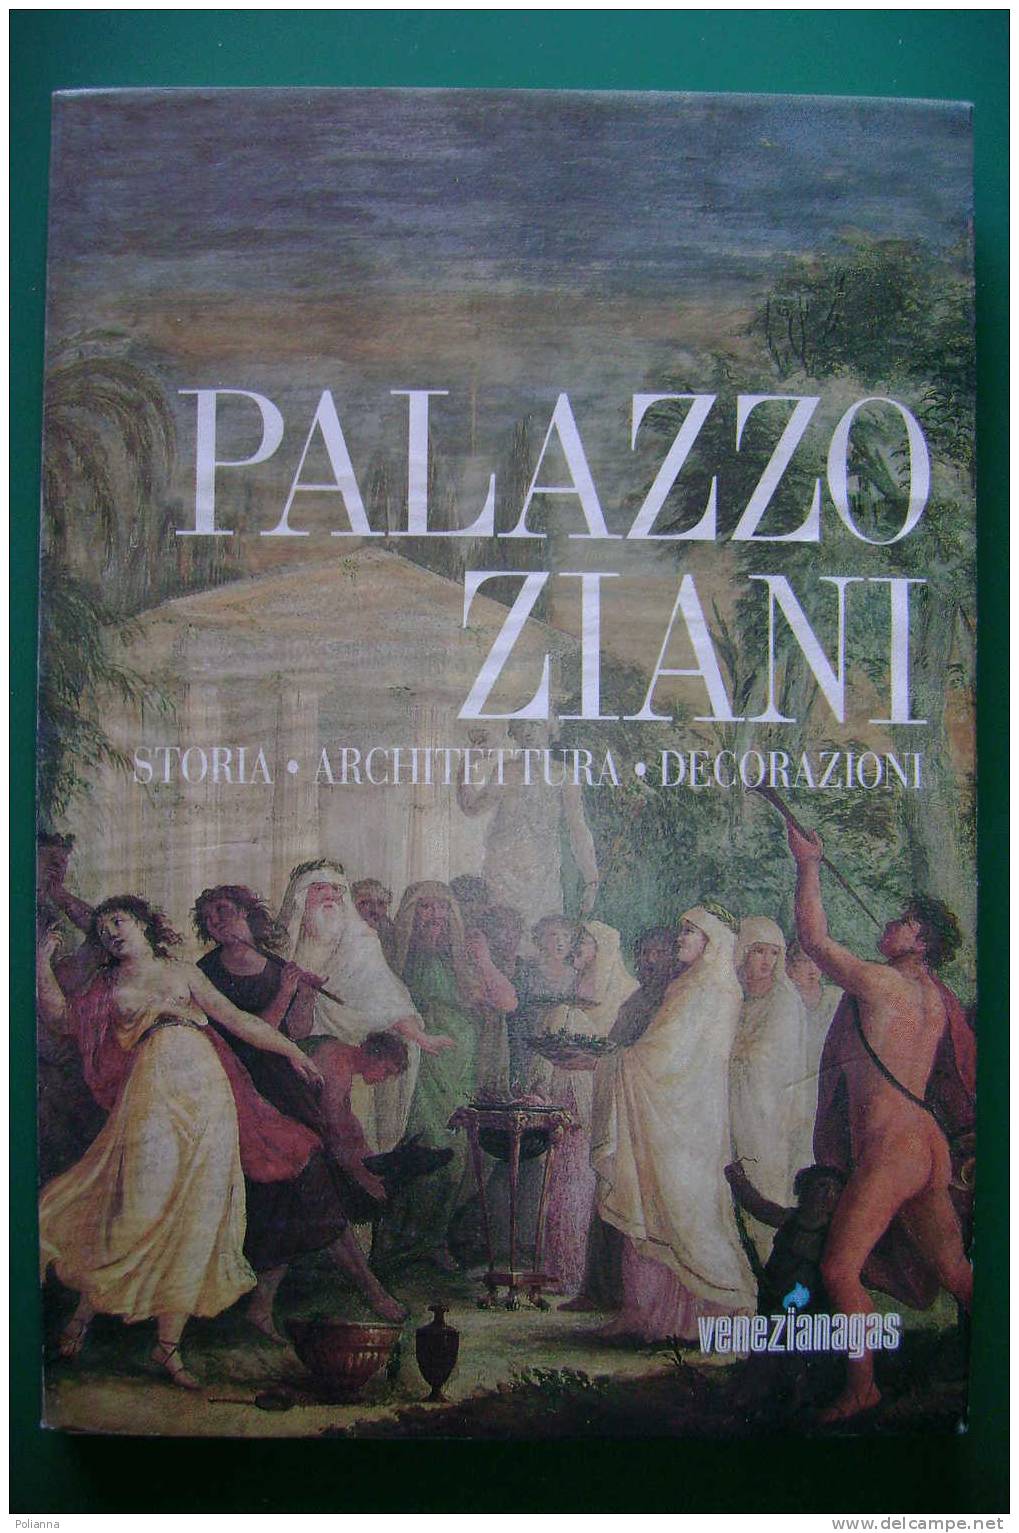 PDG/47 PALAZZO ZIANI Venezianagas 1994/VENEZIA/ARCHITETTURA - Kunst, Antiquitäten